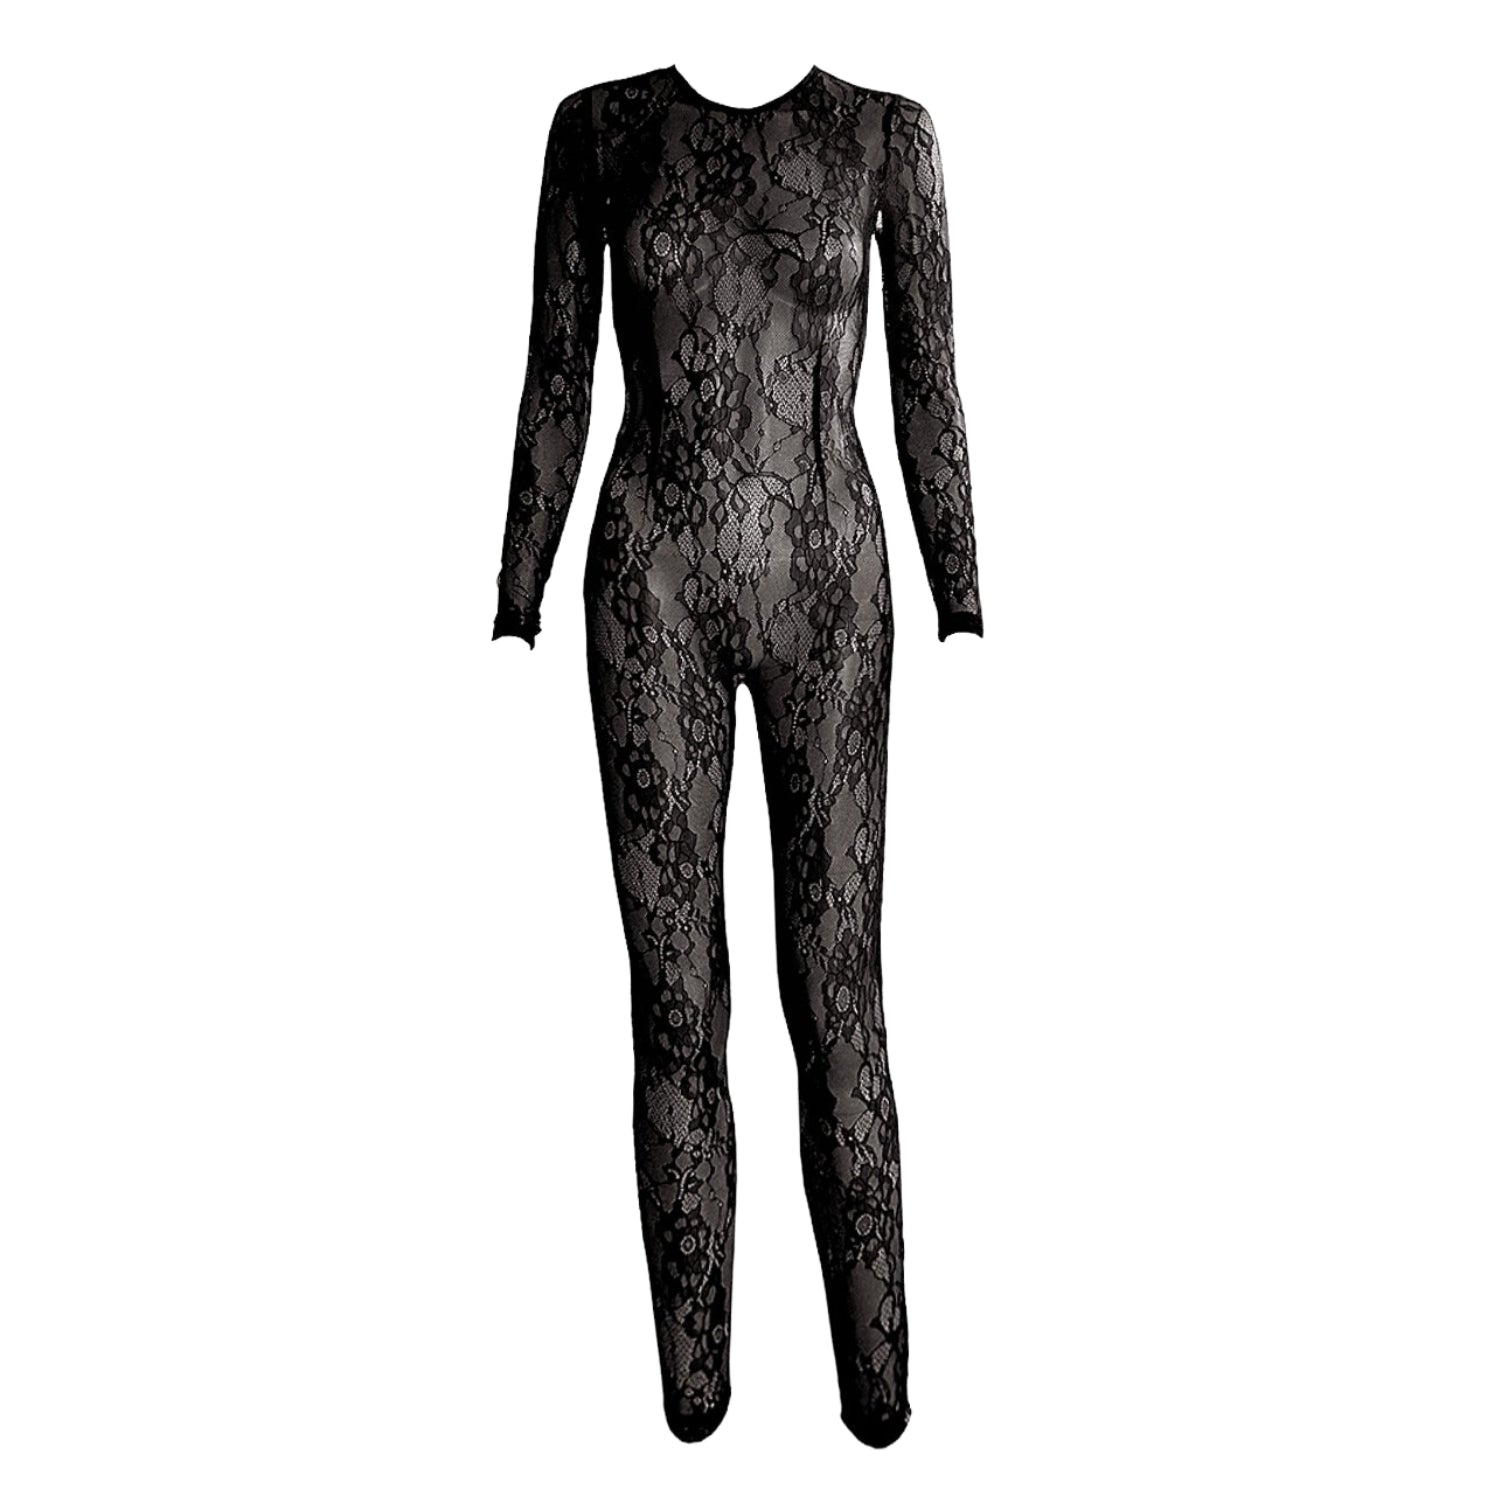 Casita Black Lace Flutter Sleeve Bodysuit